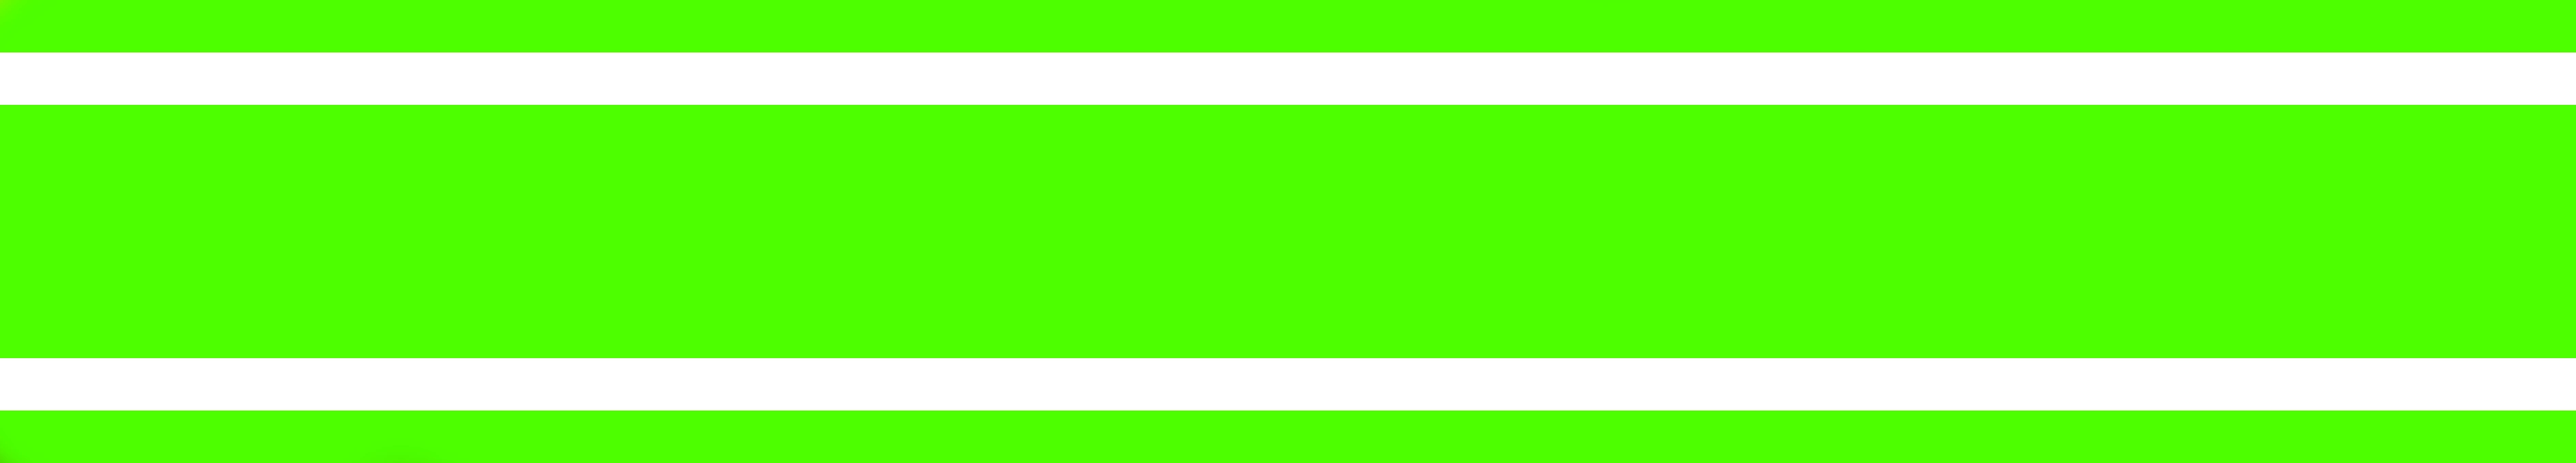 Tripple Stripe   Horizontal   Green